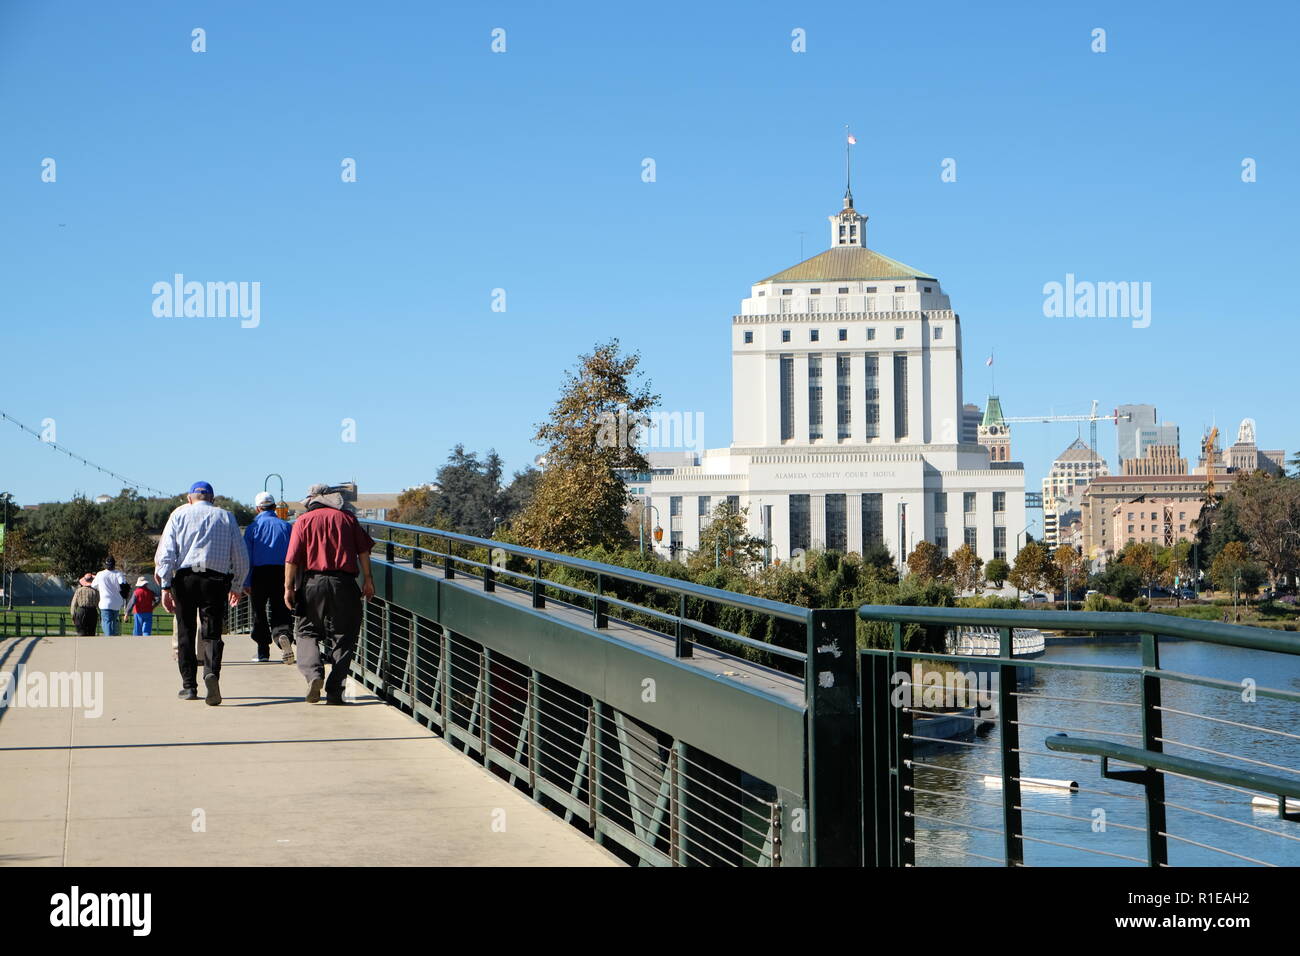 Alameda County Court House and Lake Merritt, Oakland, California, USA; pedestrian bridge with people walking. Stock Photo